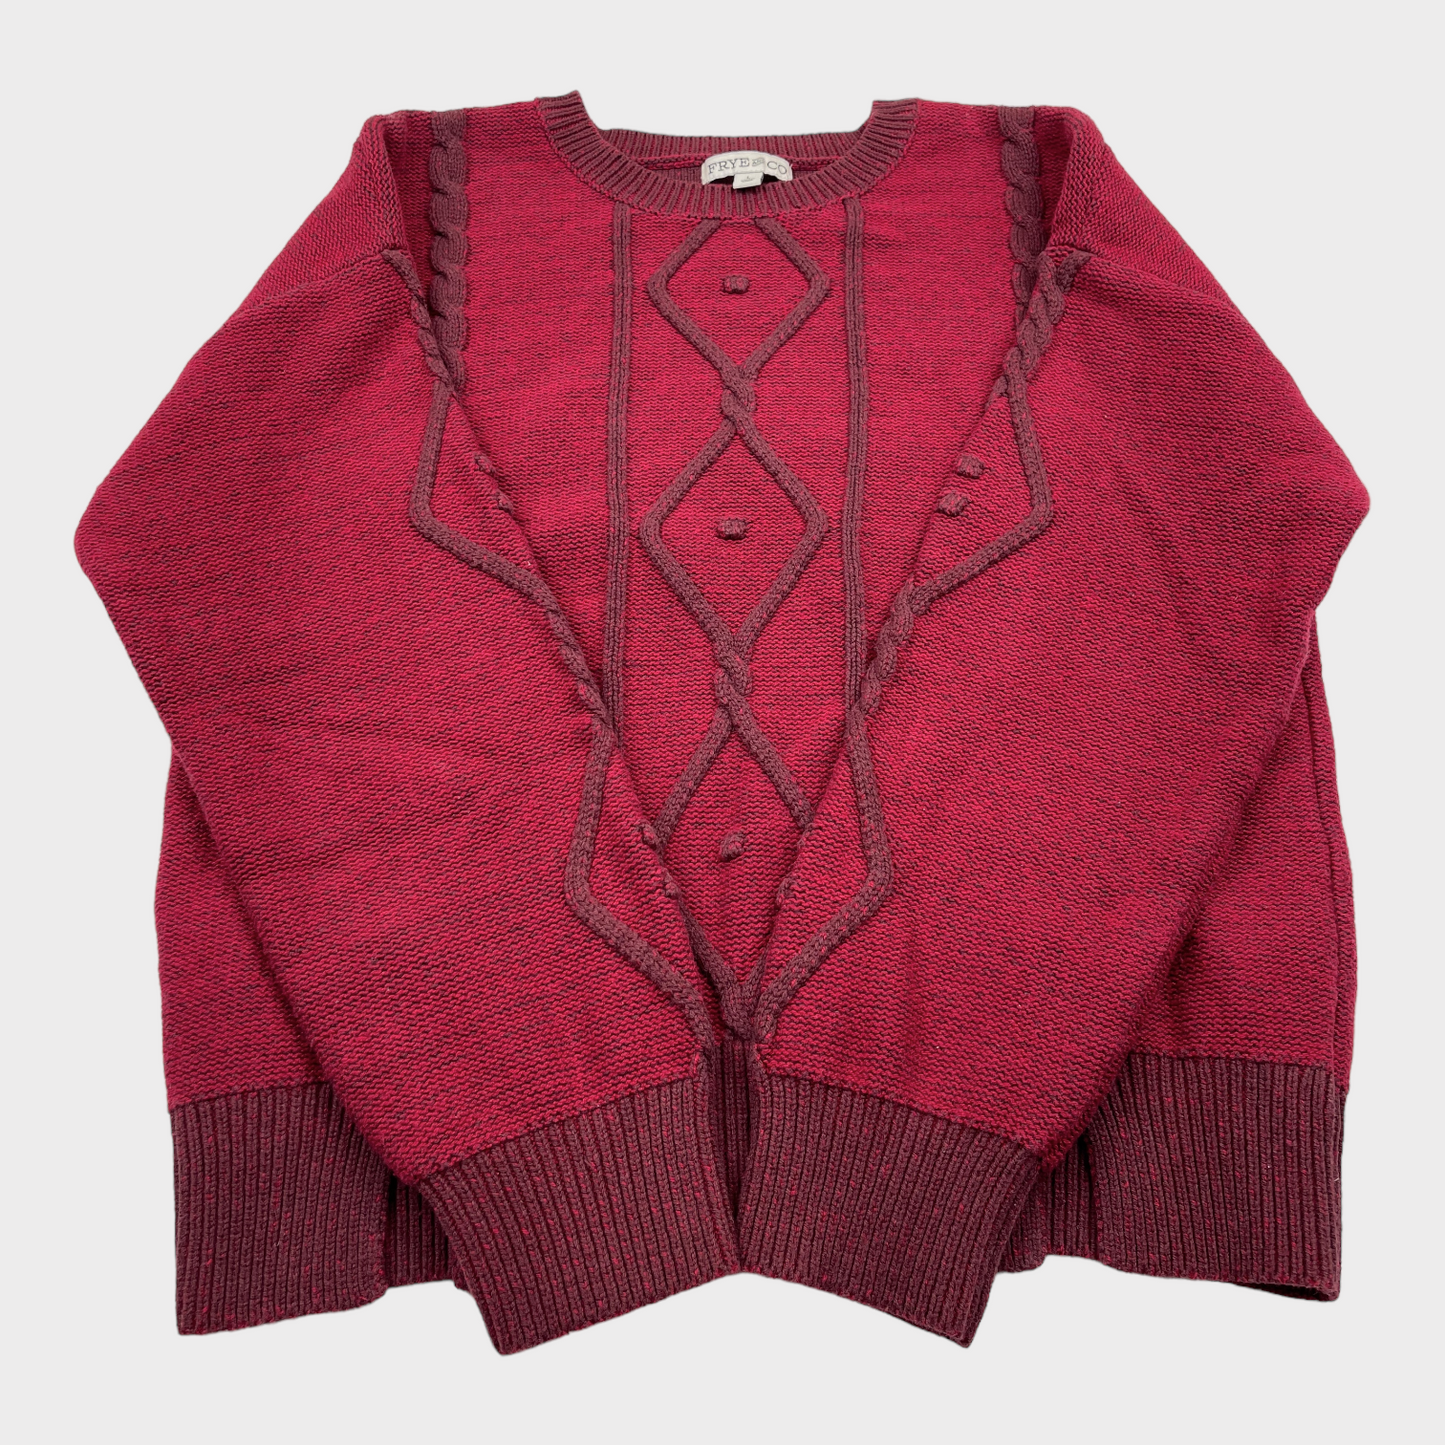 Frye & Co Burgundy Crewneck Long Sleeve Knit Sweater Women's Size Large